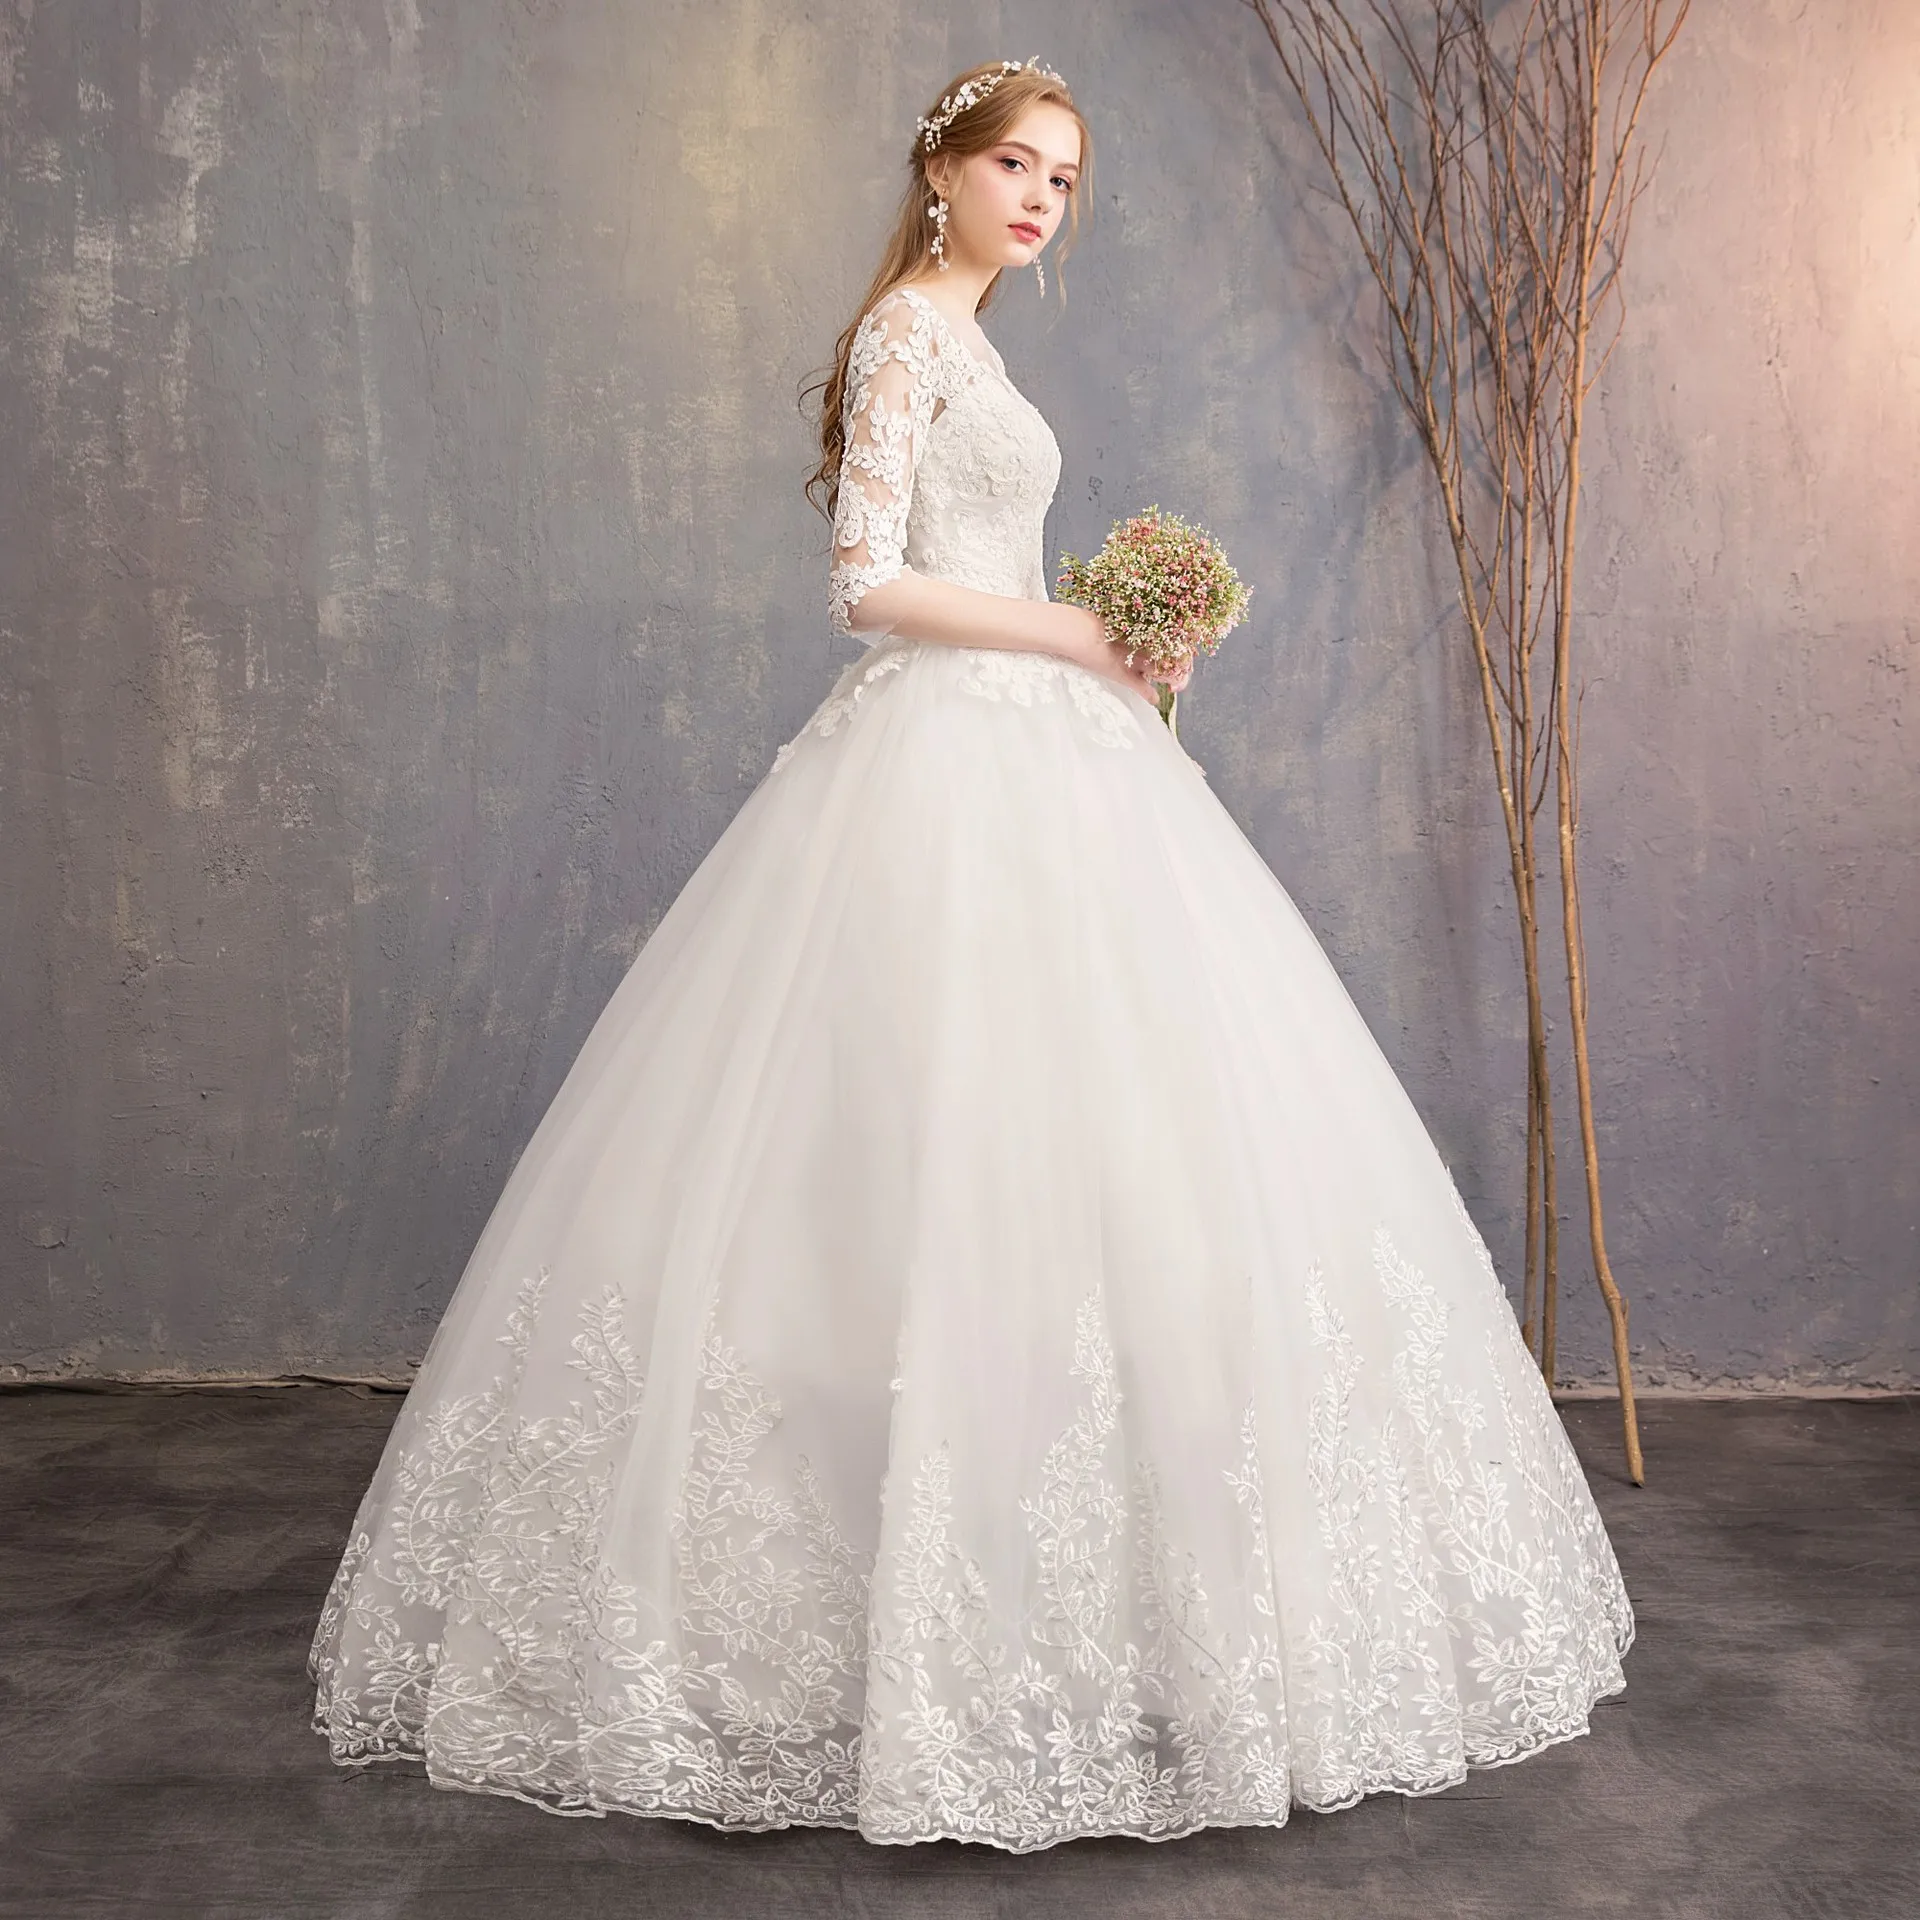 2022 New Arrival EZKUNTZA Half Sleeve Wedding Dress Lace Ball Gown Princess Simple Plus Size Bride Dress Vestido De Noiva 3